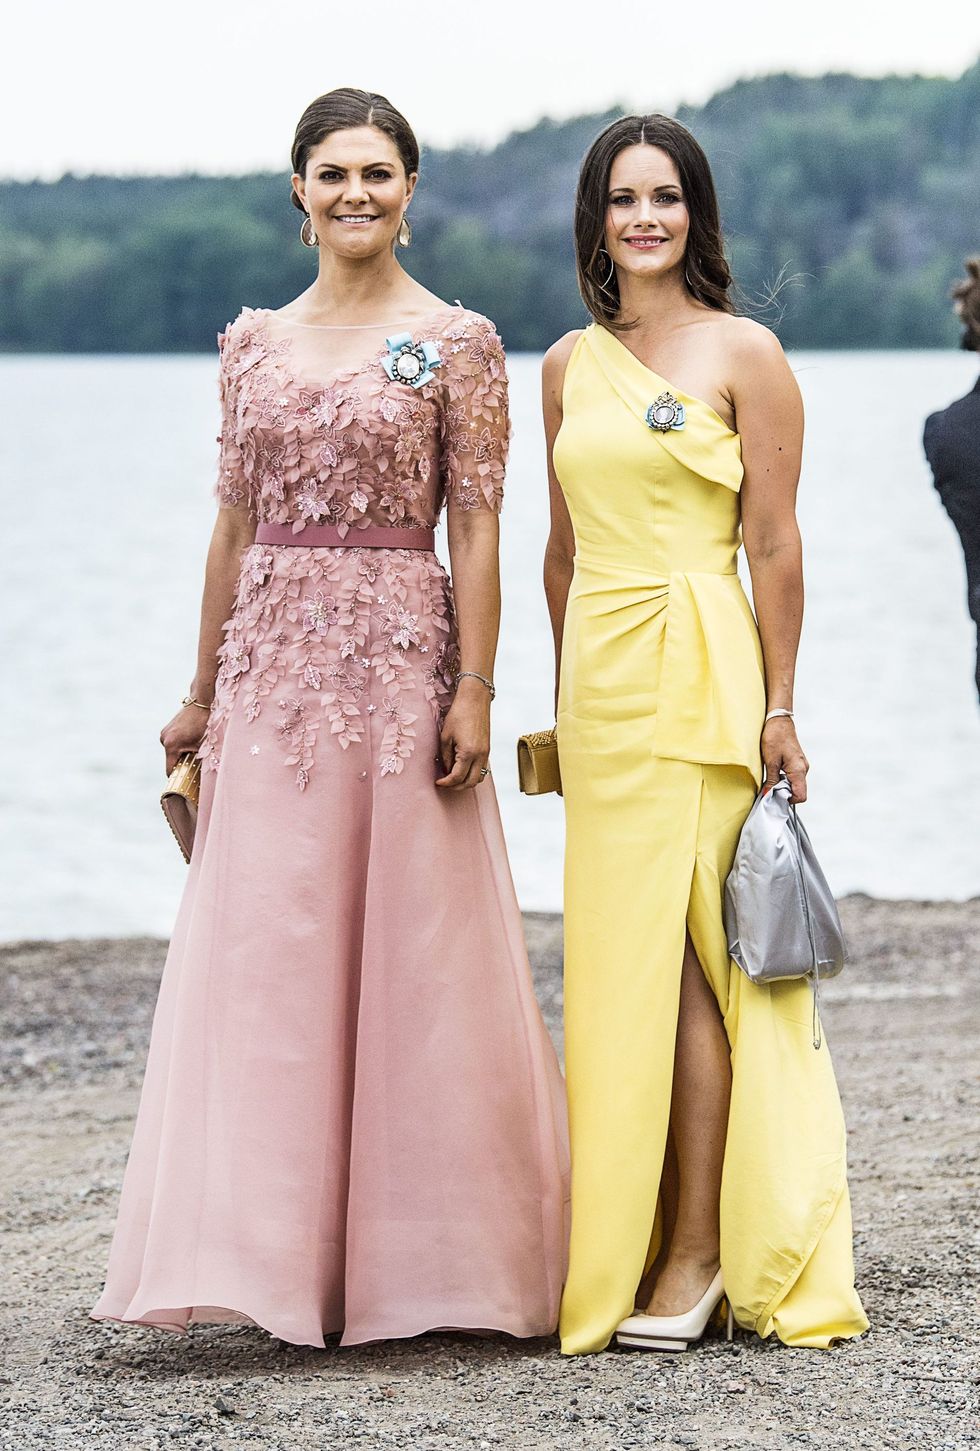 Crown Princess Victoria and Princess Sofia